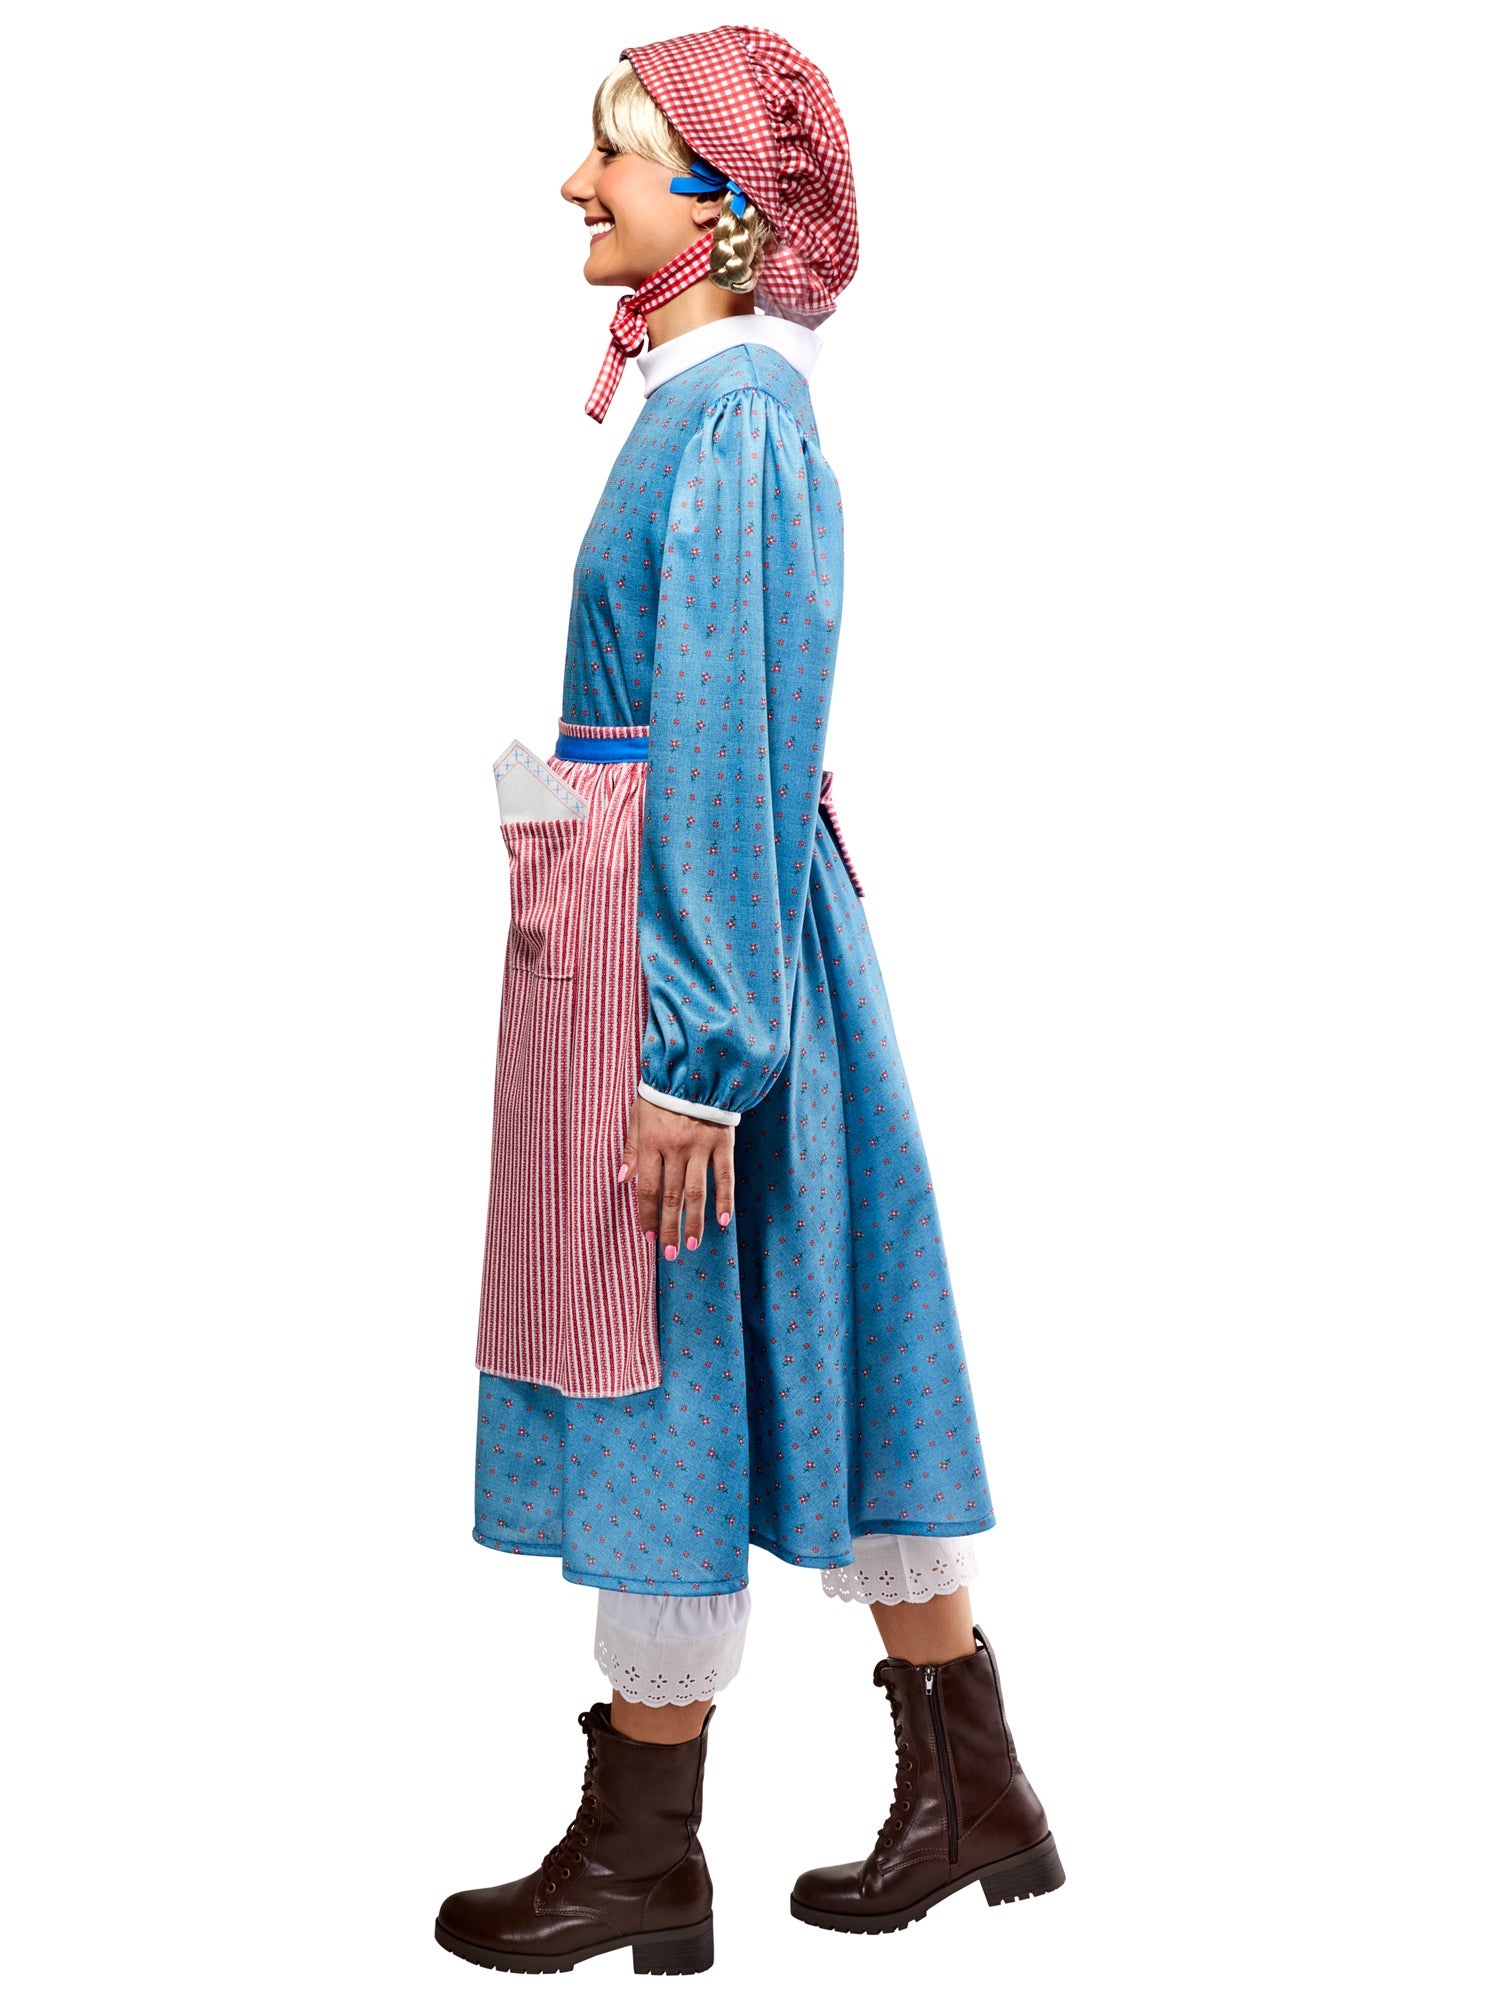 Women's American Girl Kirsten Larson Dress with Bonnet Costume Set - costumes.com